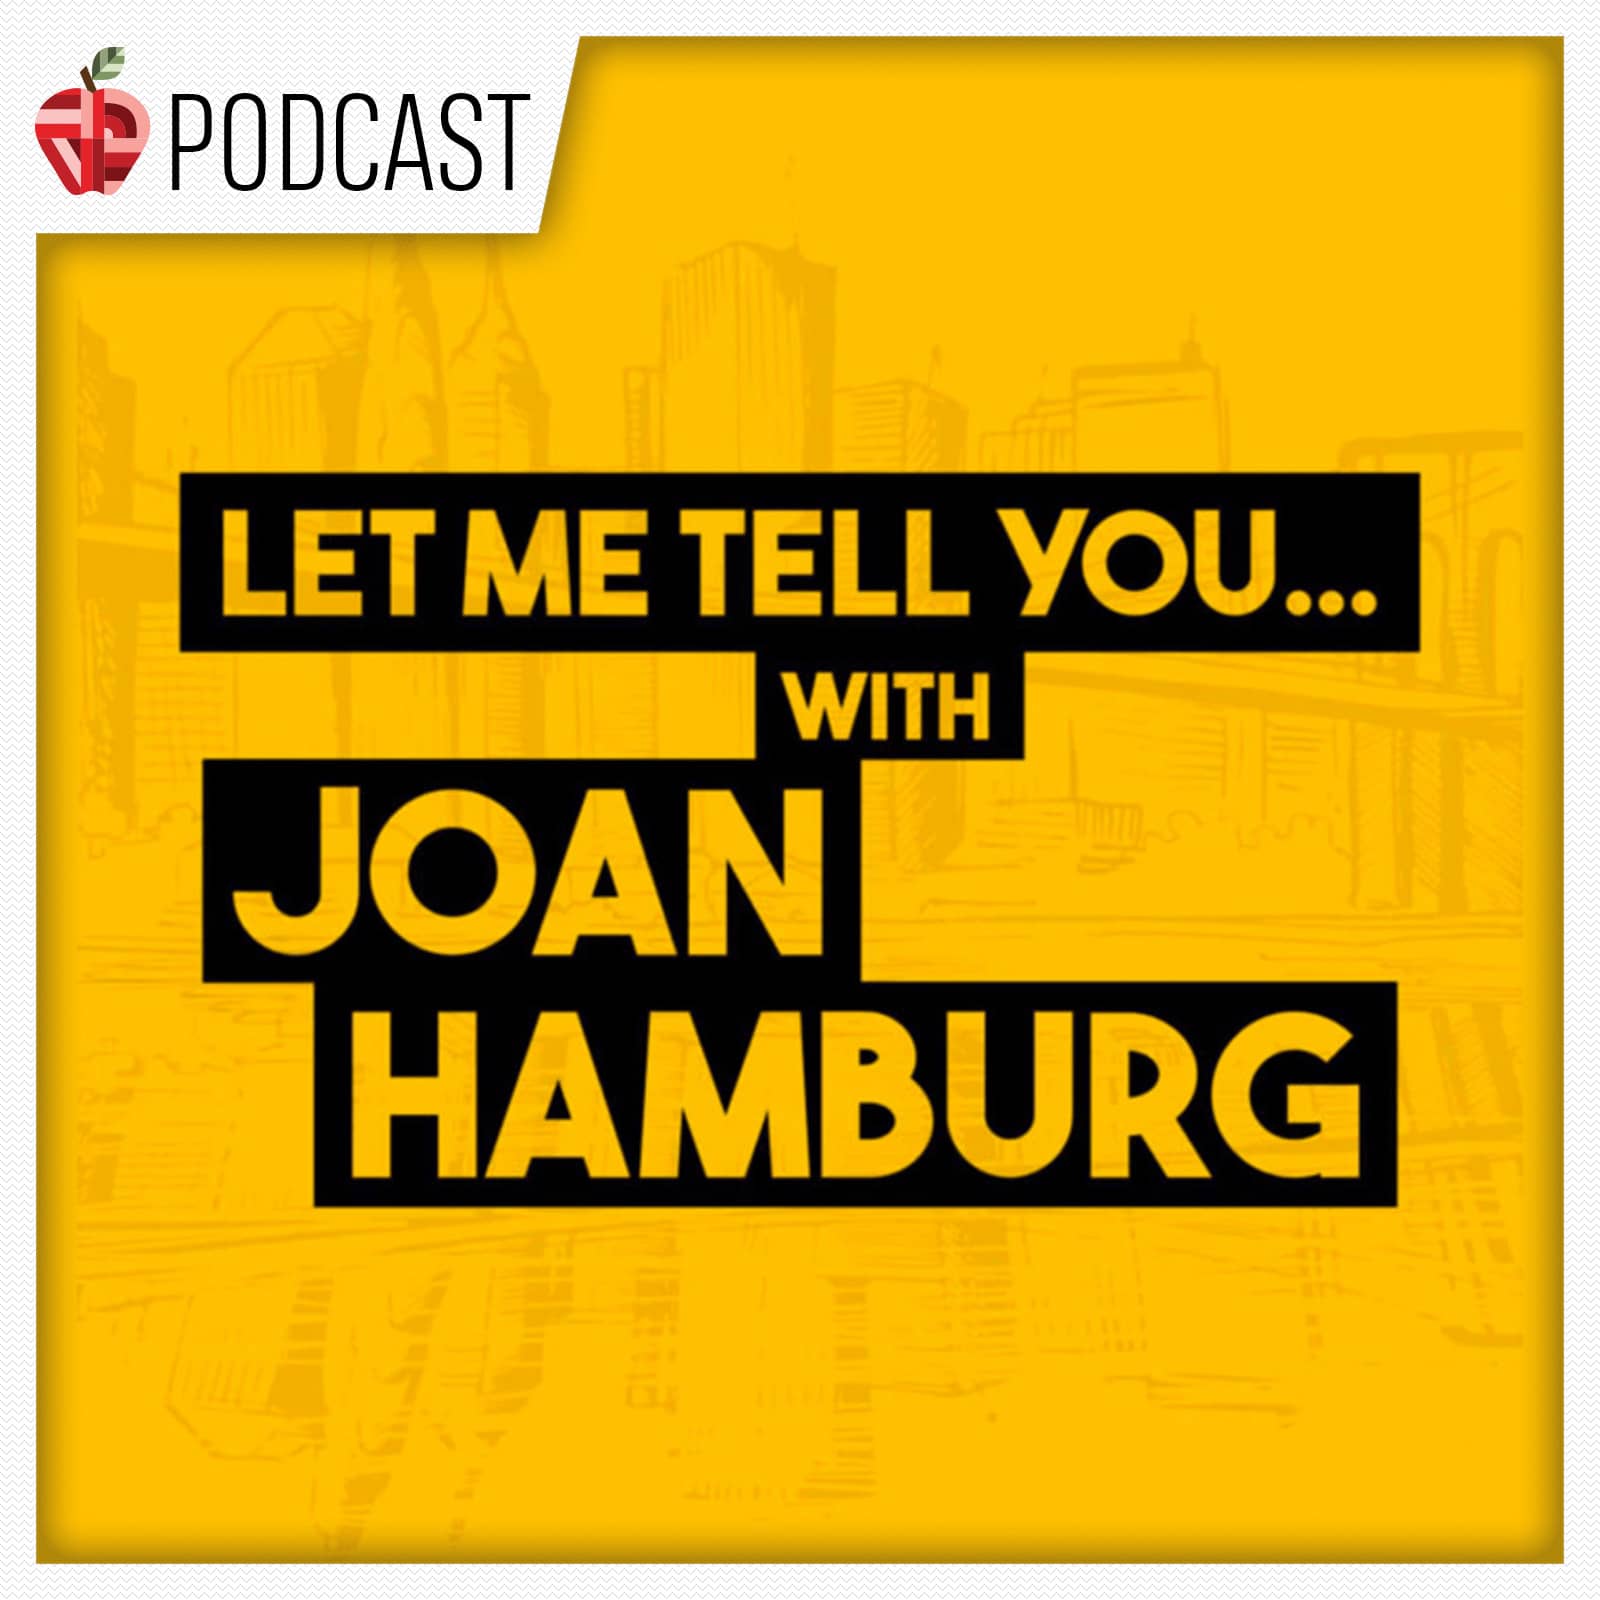 joan-hamburg-let-me-tell-you-podcast-podcast-logo-24